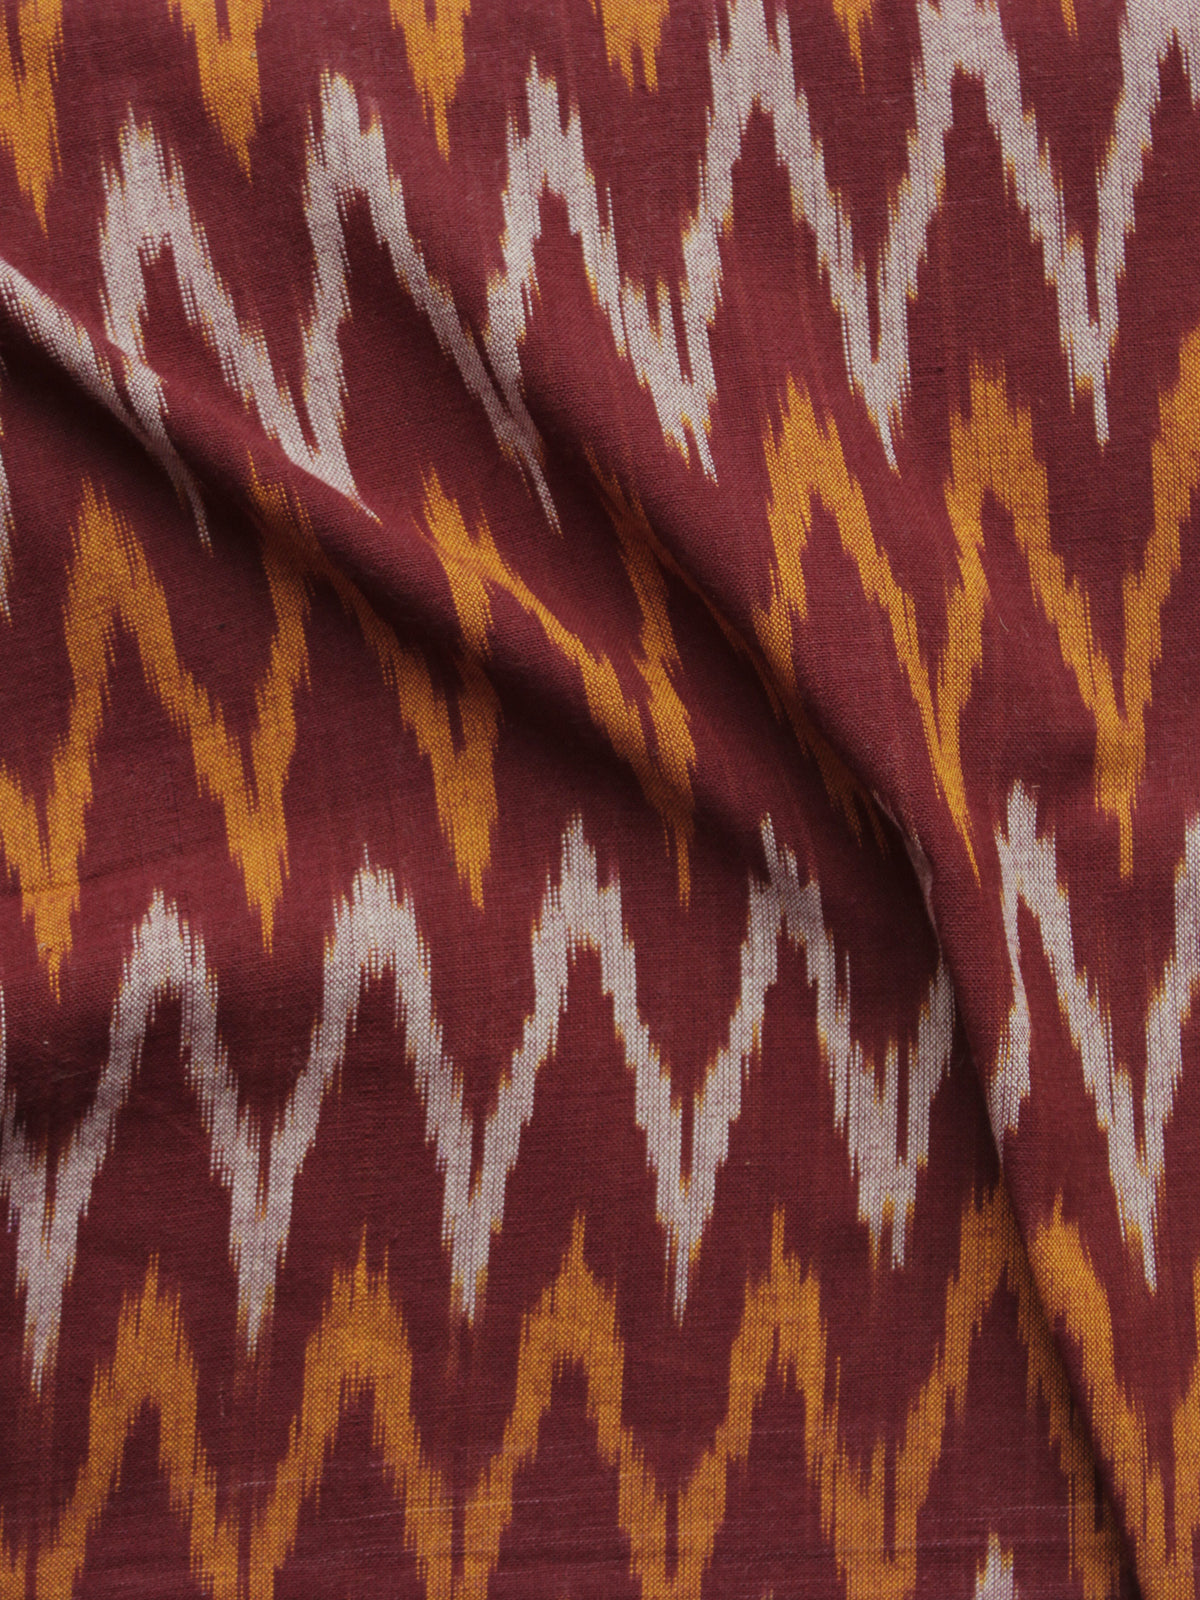 Maroon Orange Ivory Pochampally Hand Woven Ikat Fabric Per Meter - F002F909